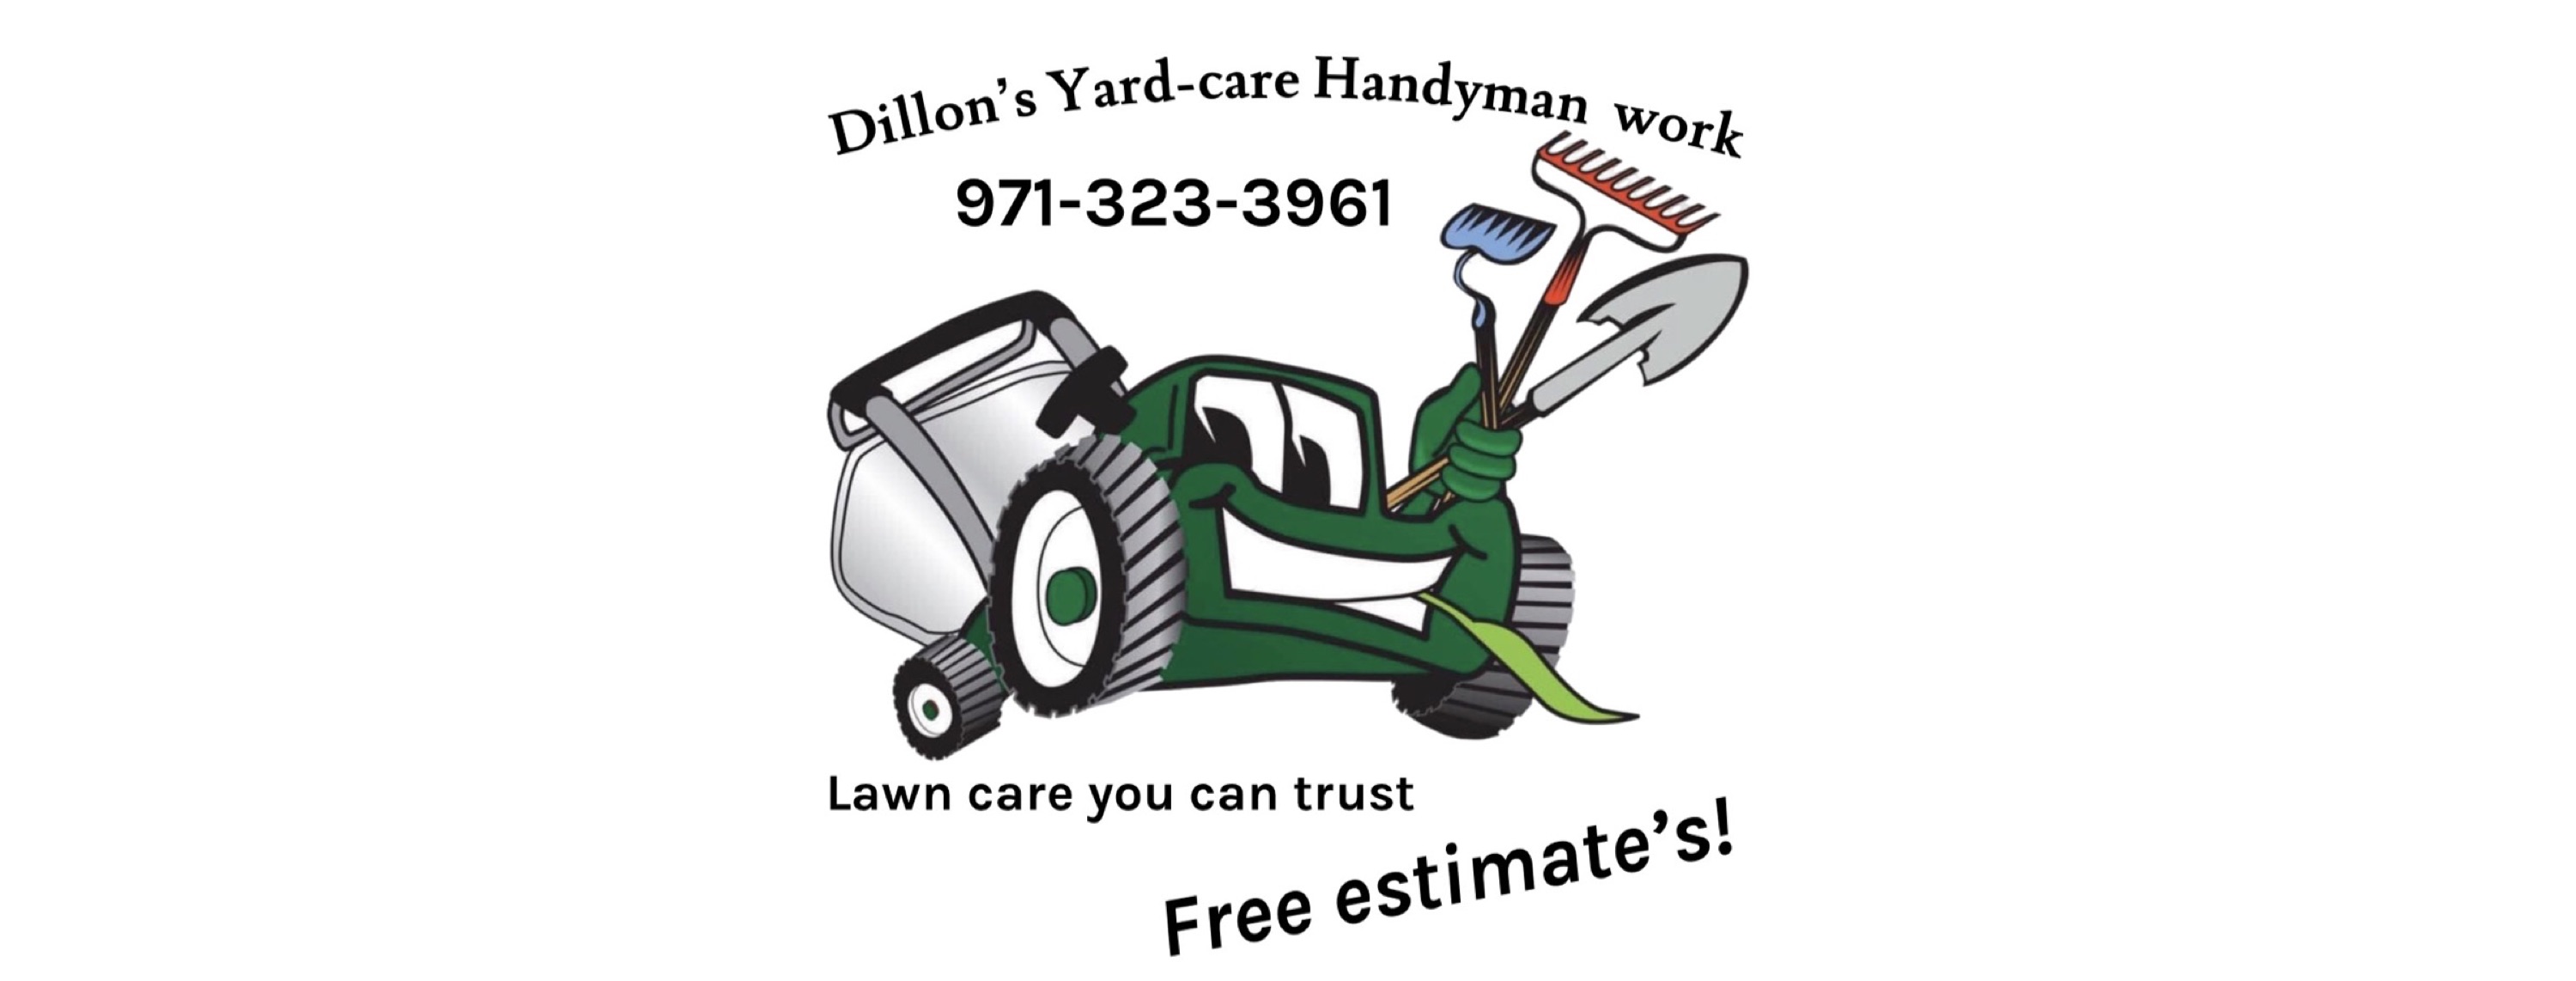 Dillon's Yardcare Handyman Work Logo